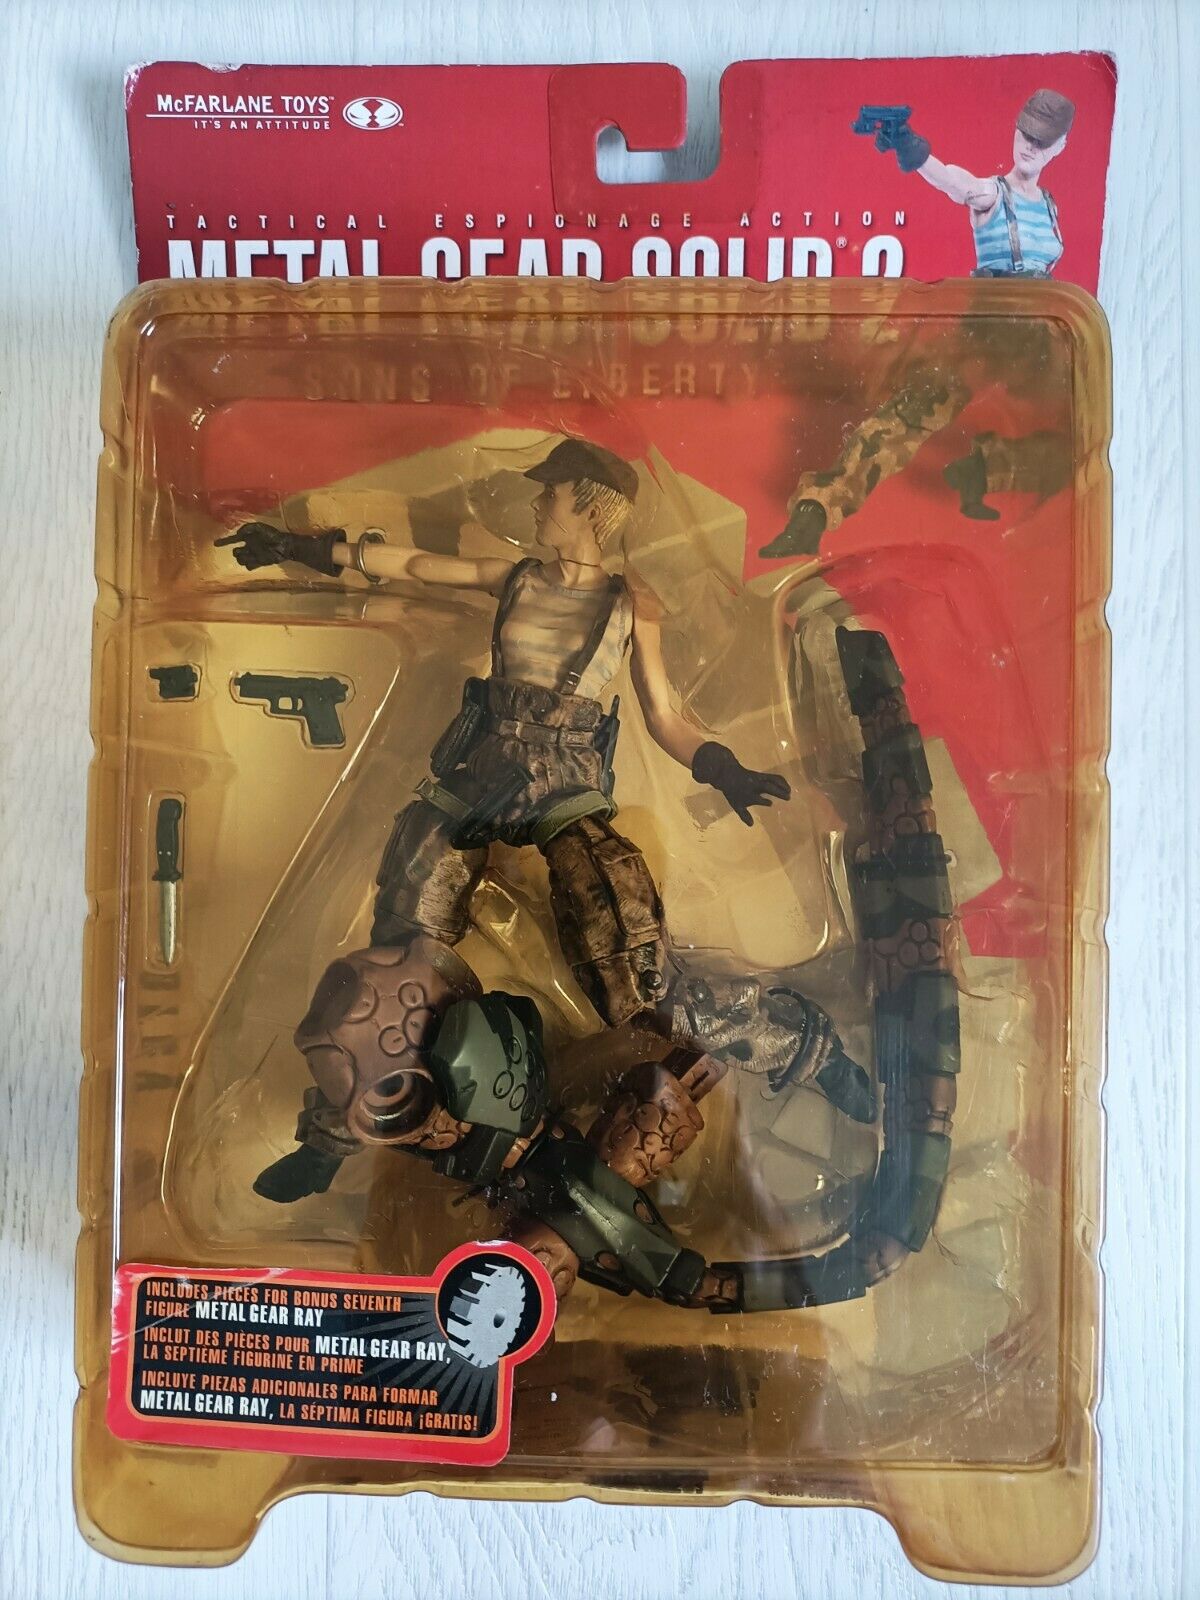 Metal Gear Solid 2 Sons of Liberty 6 Action Figure Set McFarlane Toys Konami Figures ميتال جير سوليد 2 مجموعة من 6 قطع مجمات